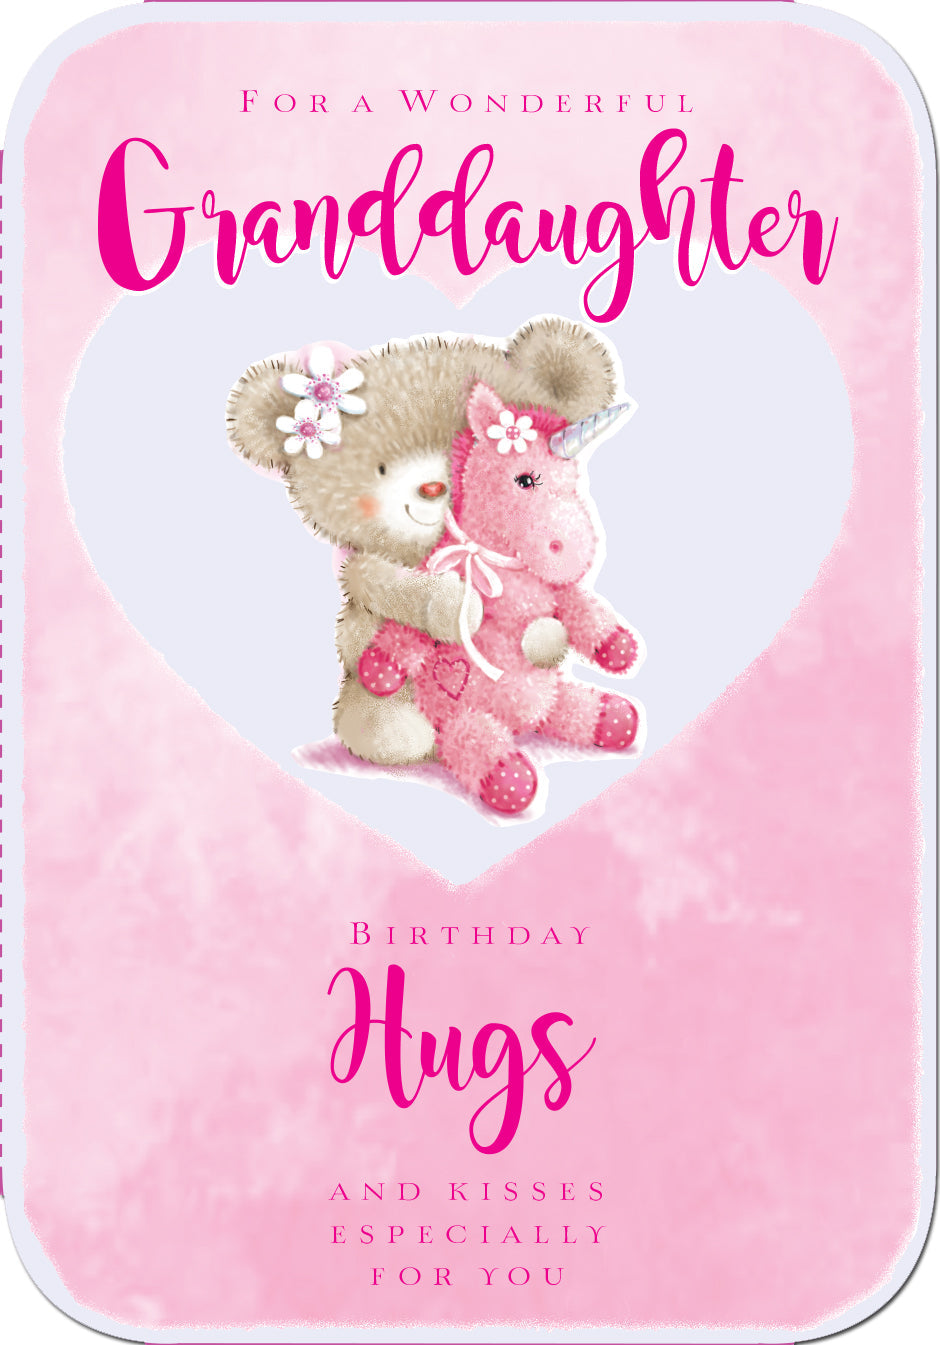 Granddaughter Birthday Card - Bear Cuddles Pink Unicorn